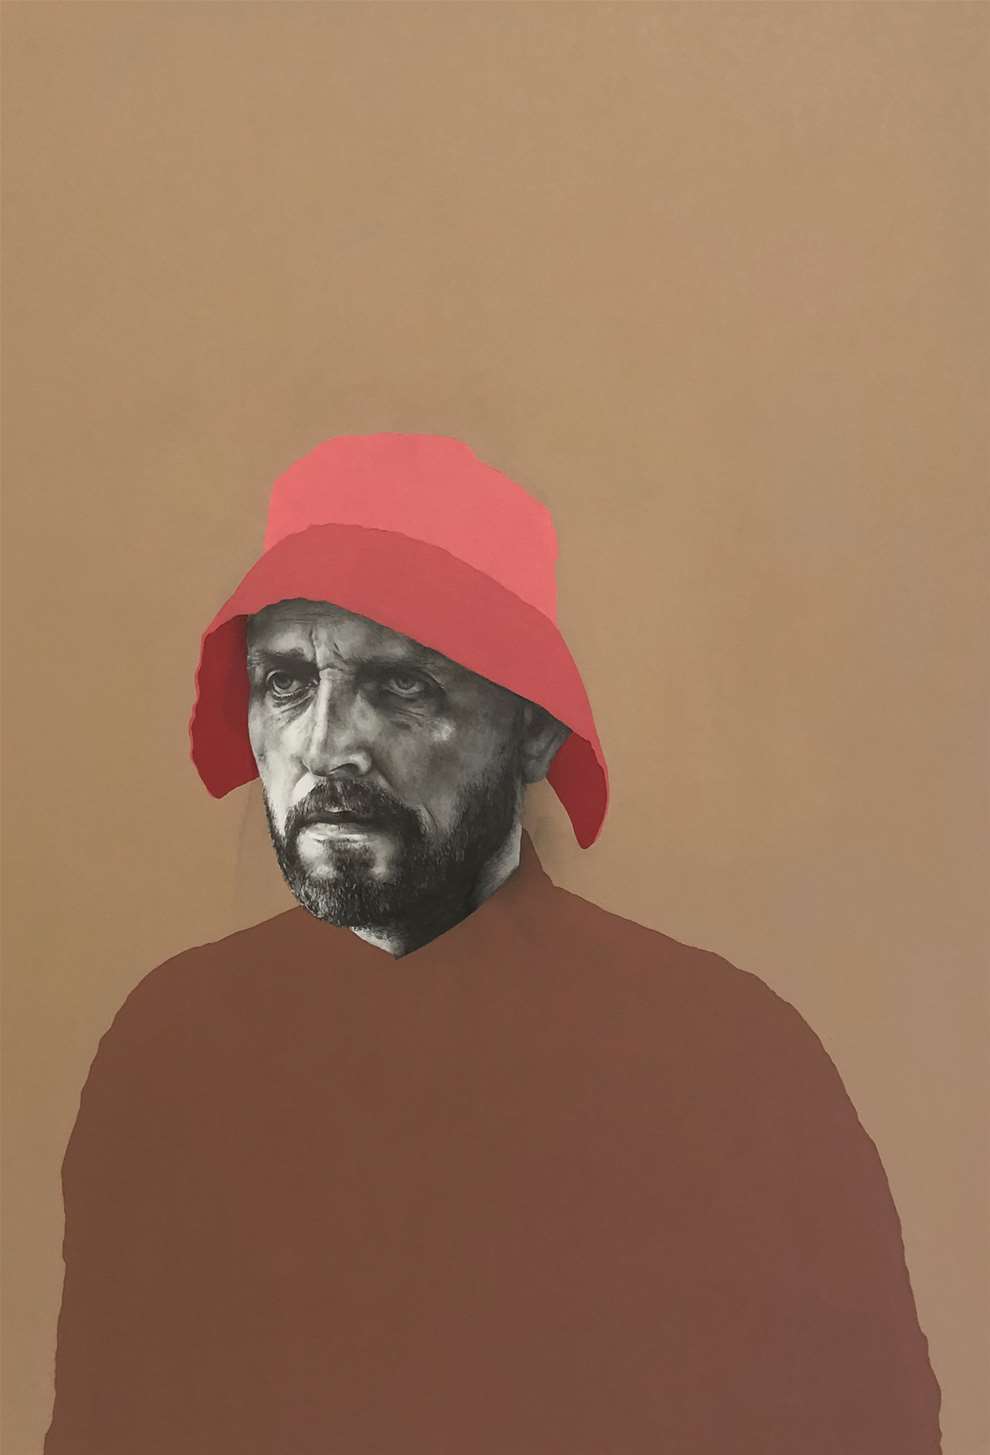 Patrick  Morales-Lee, Pencil and charcoal self portrait illustration of Patrick Morales-Lee.